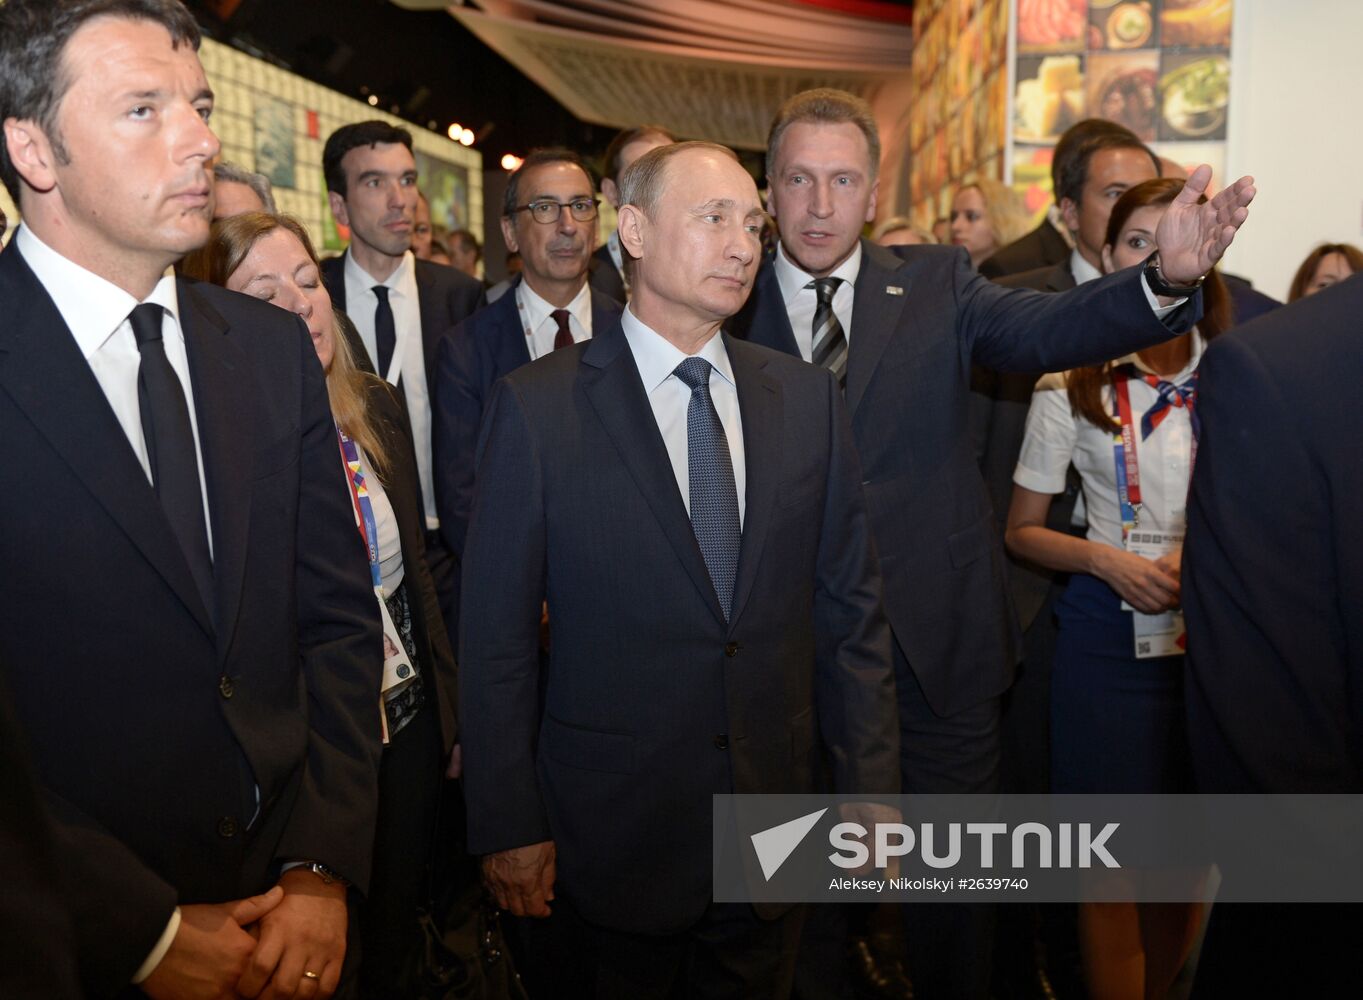 President Vladimir Putin's visit to Italy